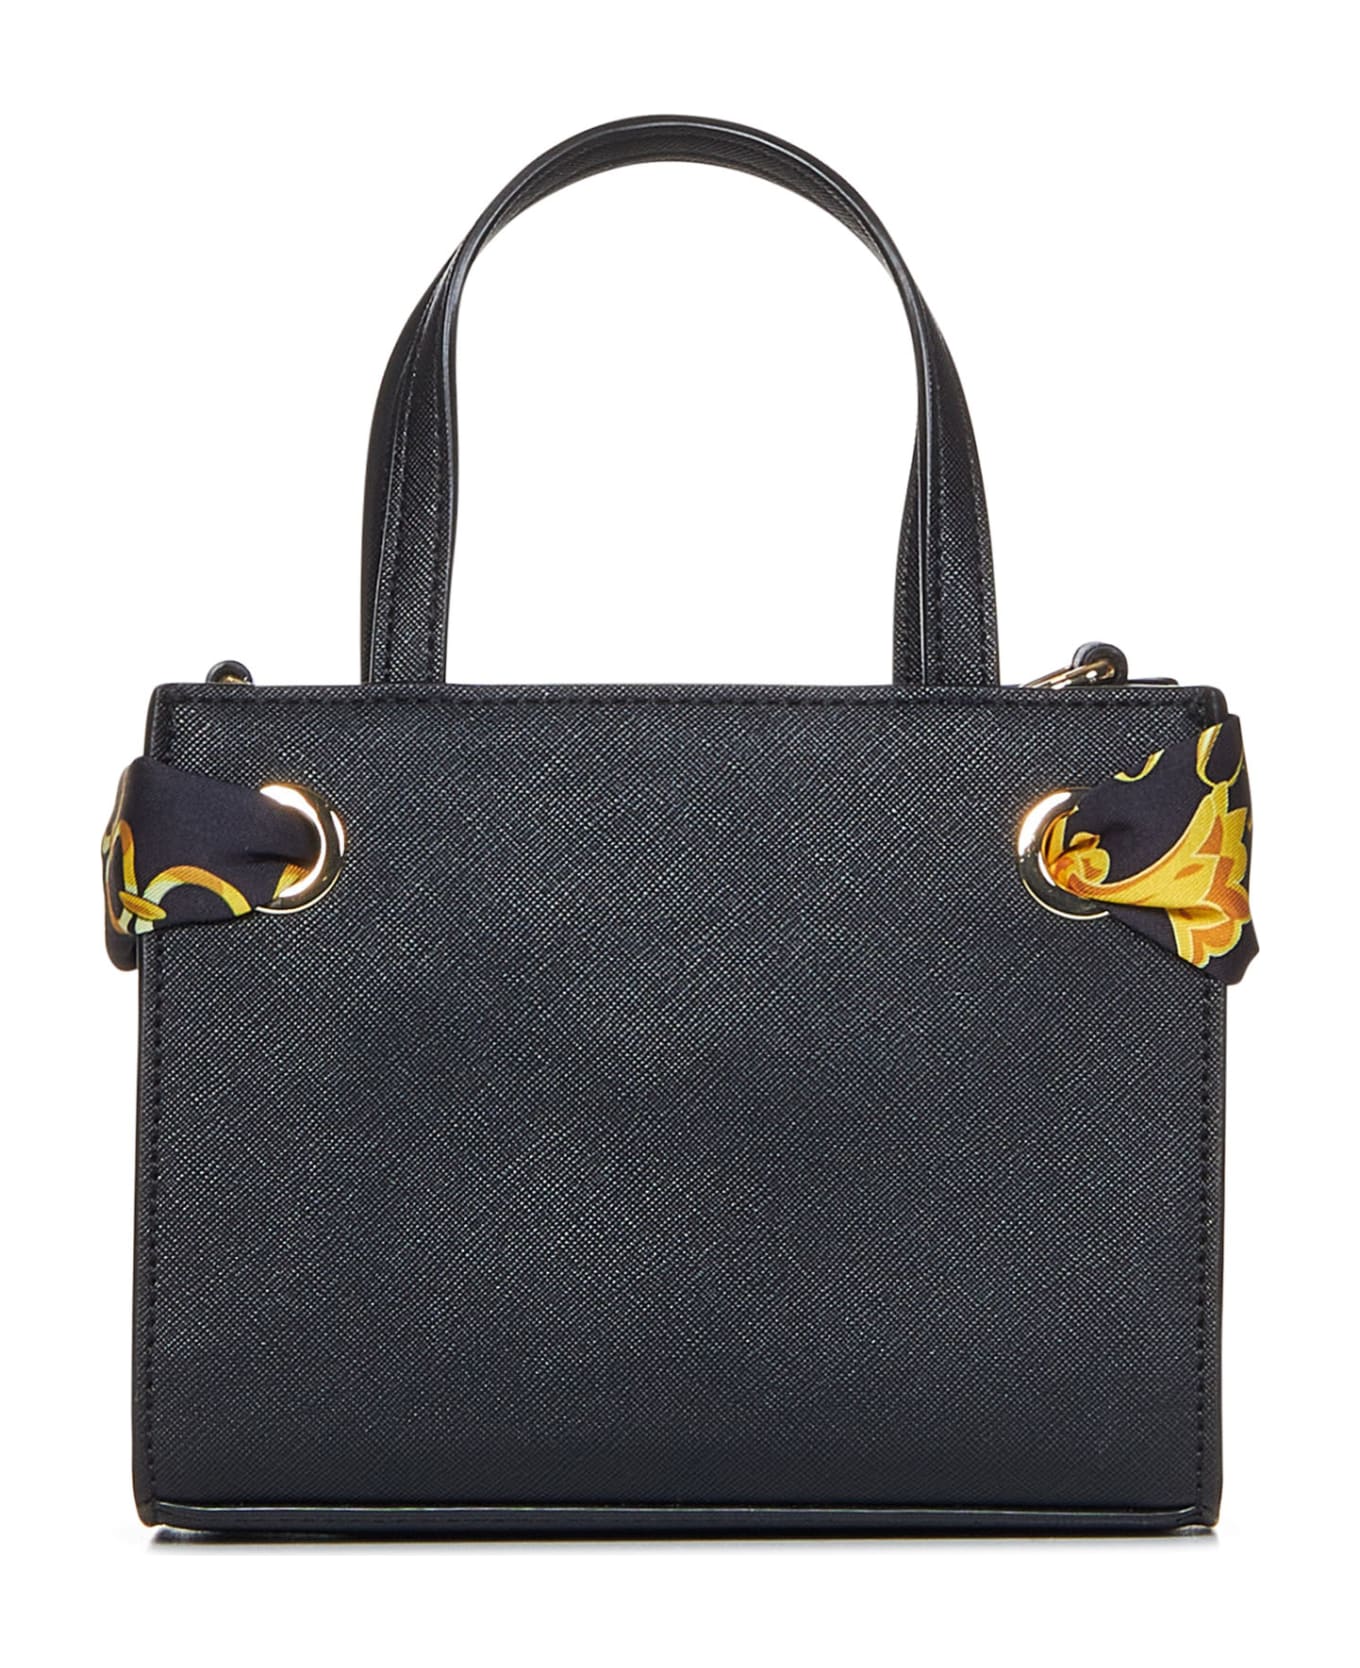 Versace Jeans Couture Thelma Classic Handbag - Black